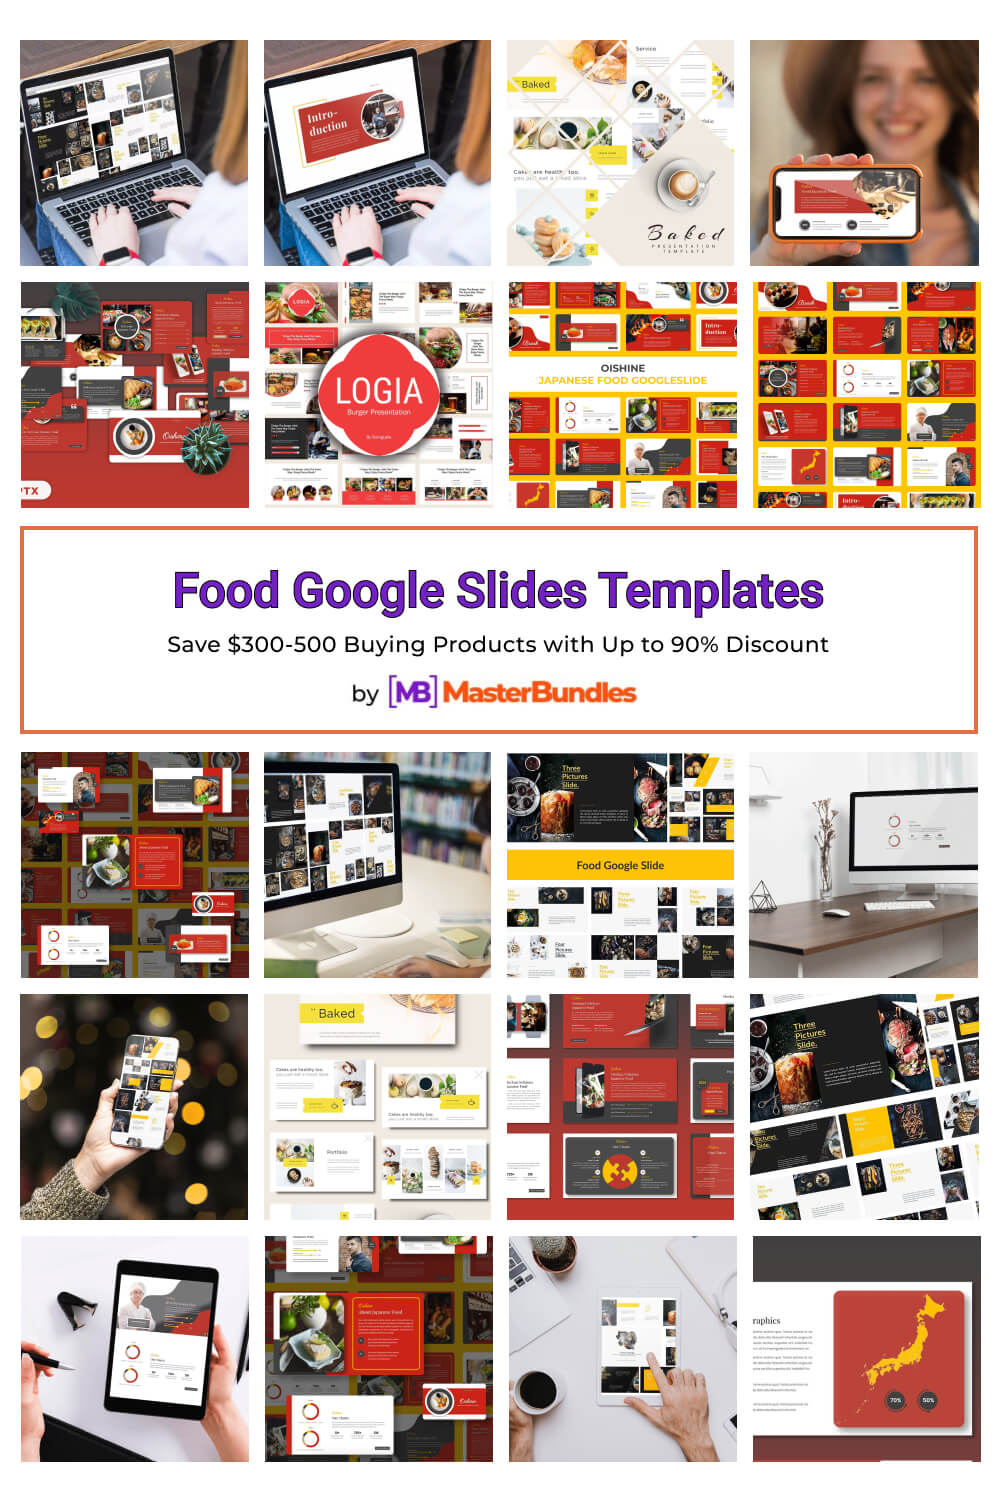 food google slides templates pinterest image.